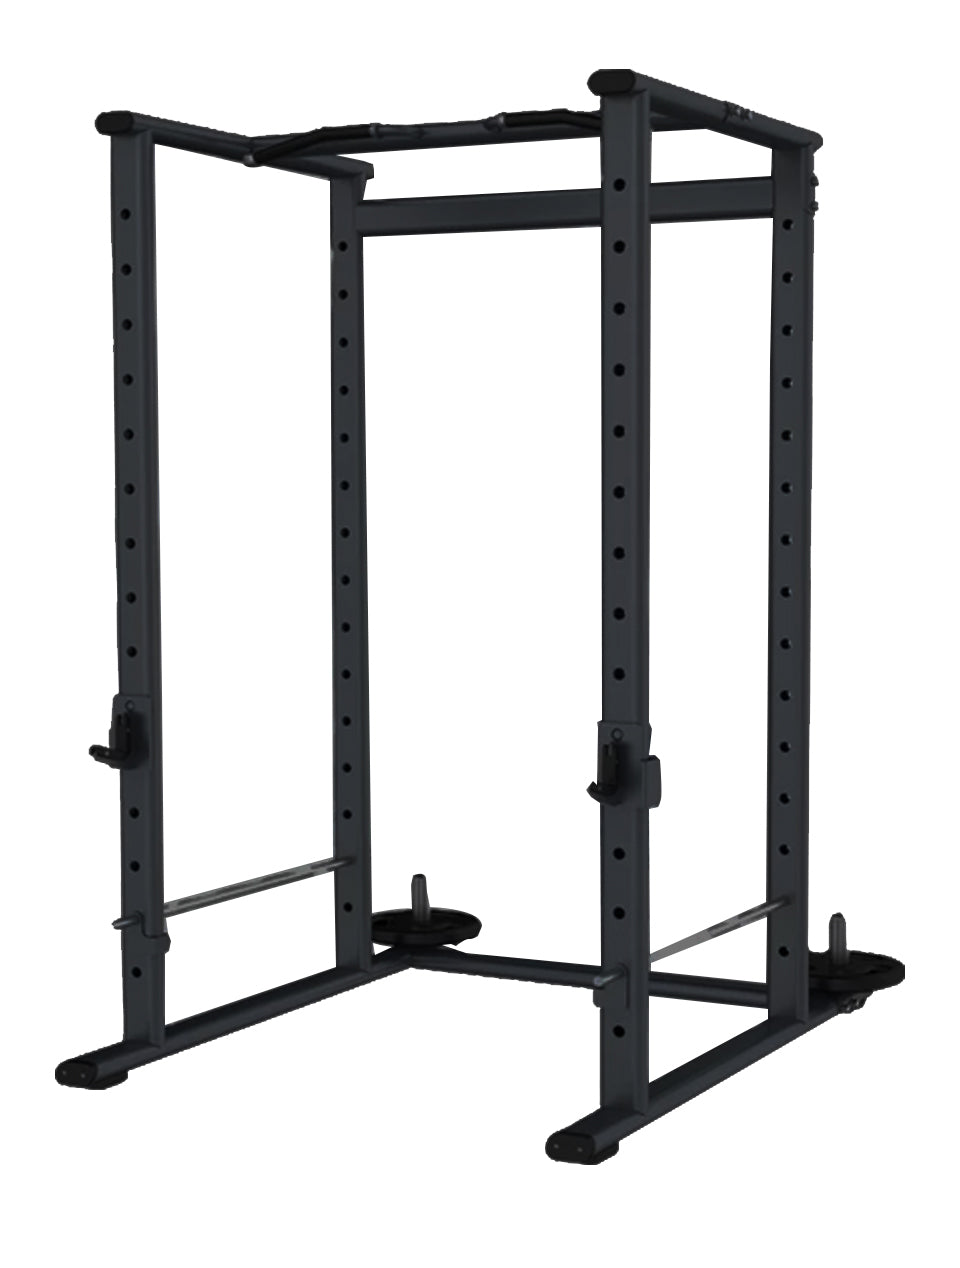 1441 Fitness Power Cage Squat Rack Black - 41FF48B